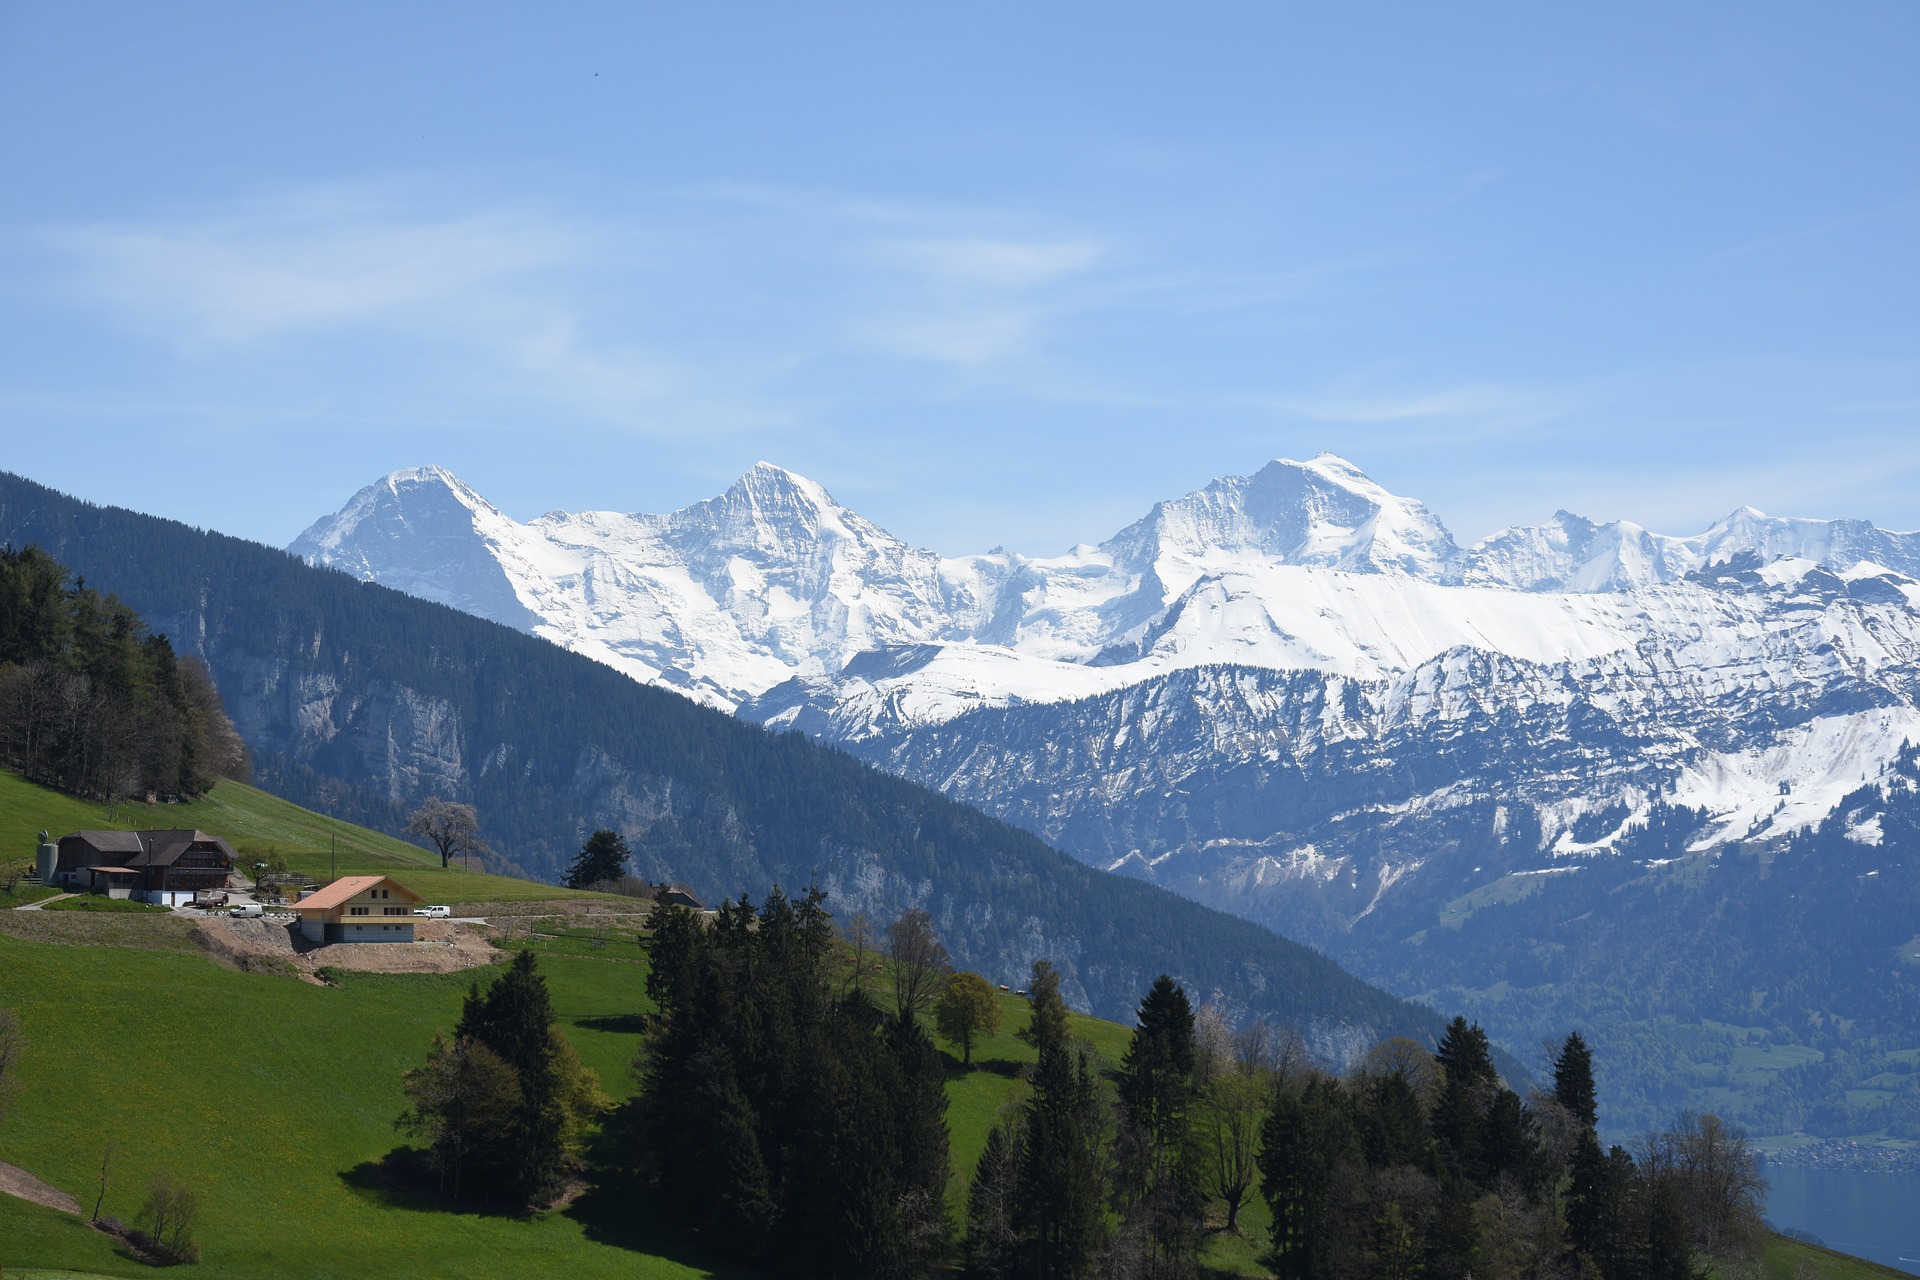 SWITZERLAND REPORT|スイス 視察ブログ